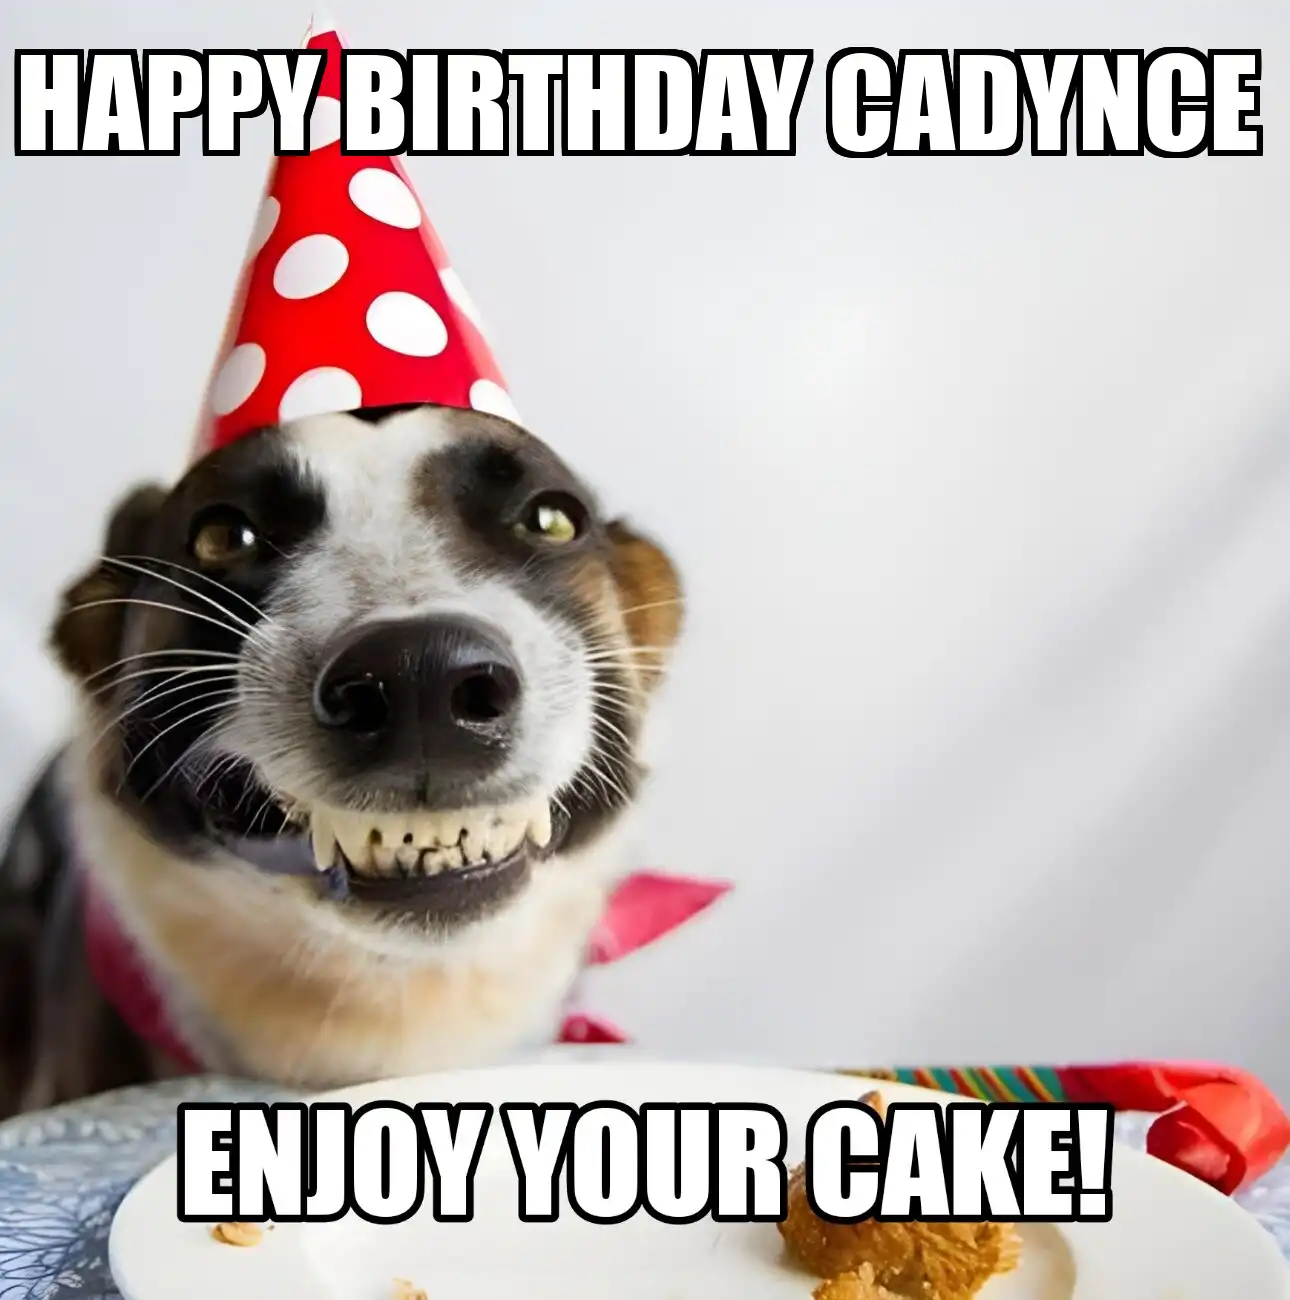 Happy Birthday Cadynce Enjoy Your Cake Dog Meme